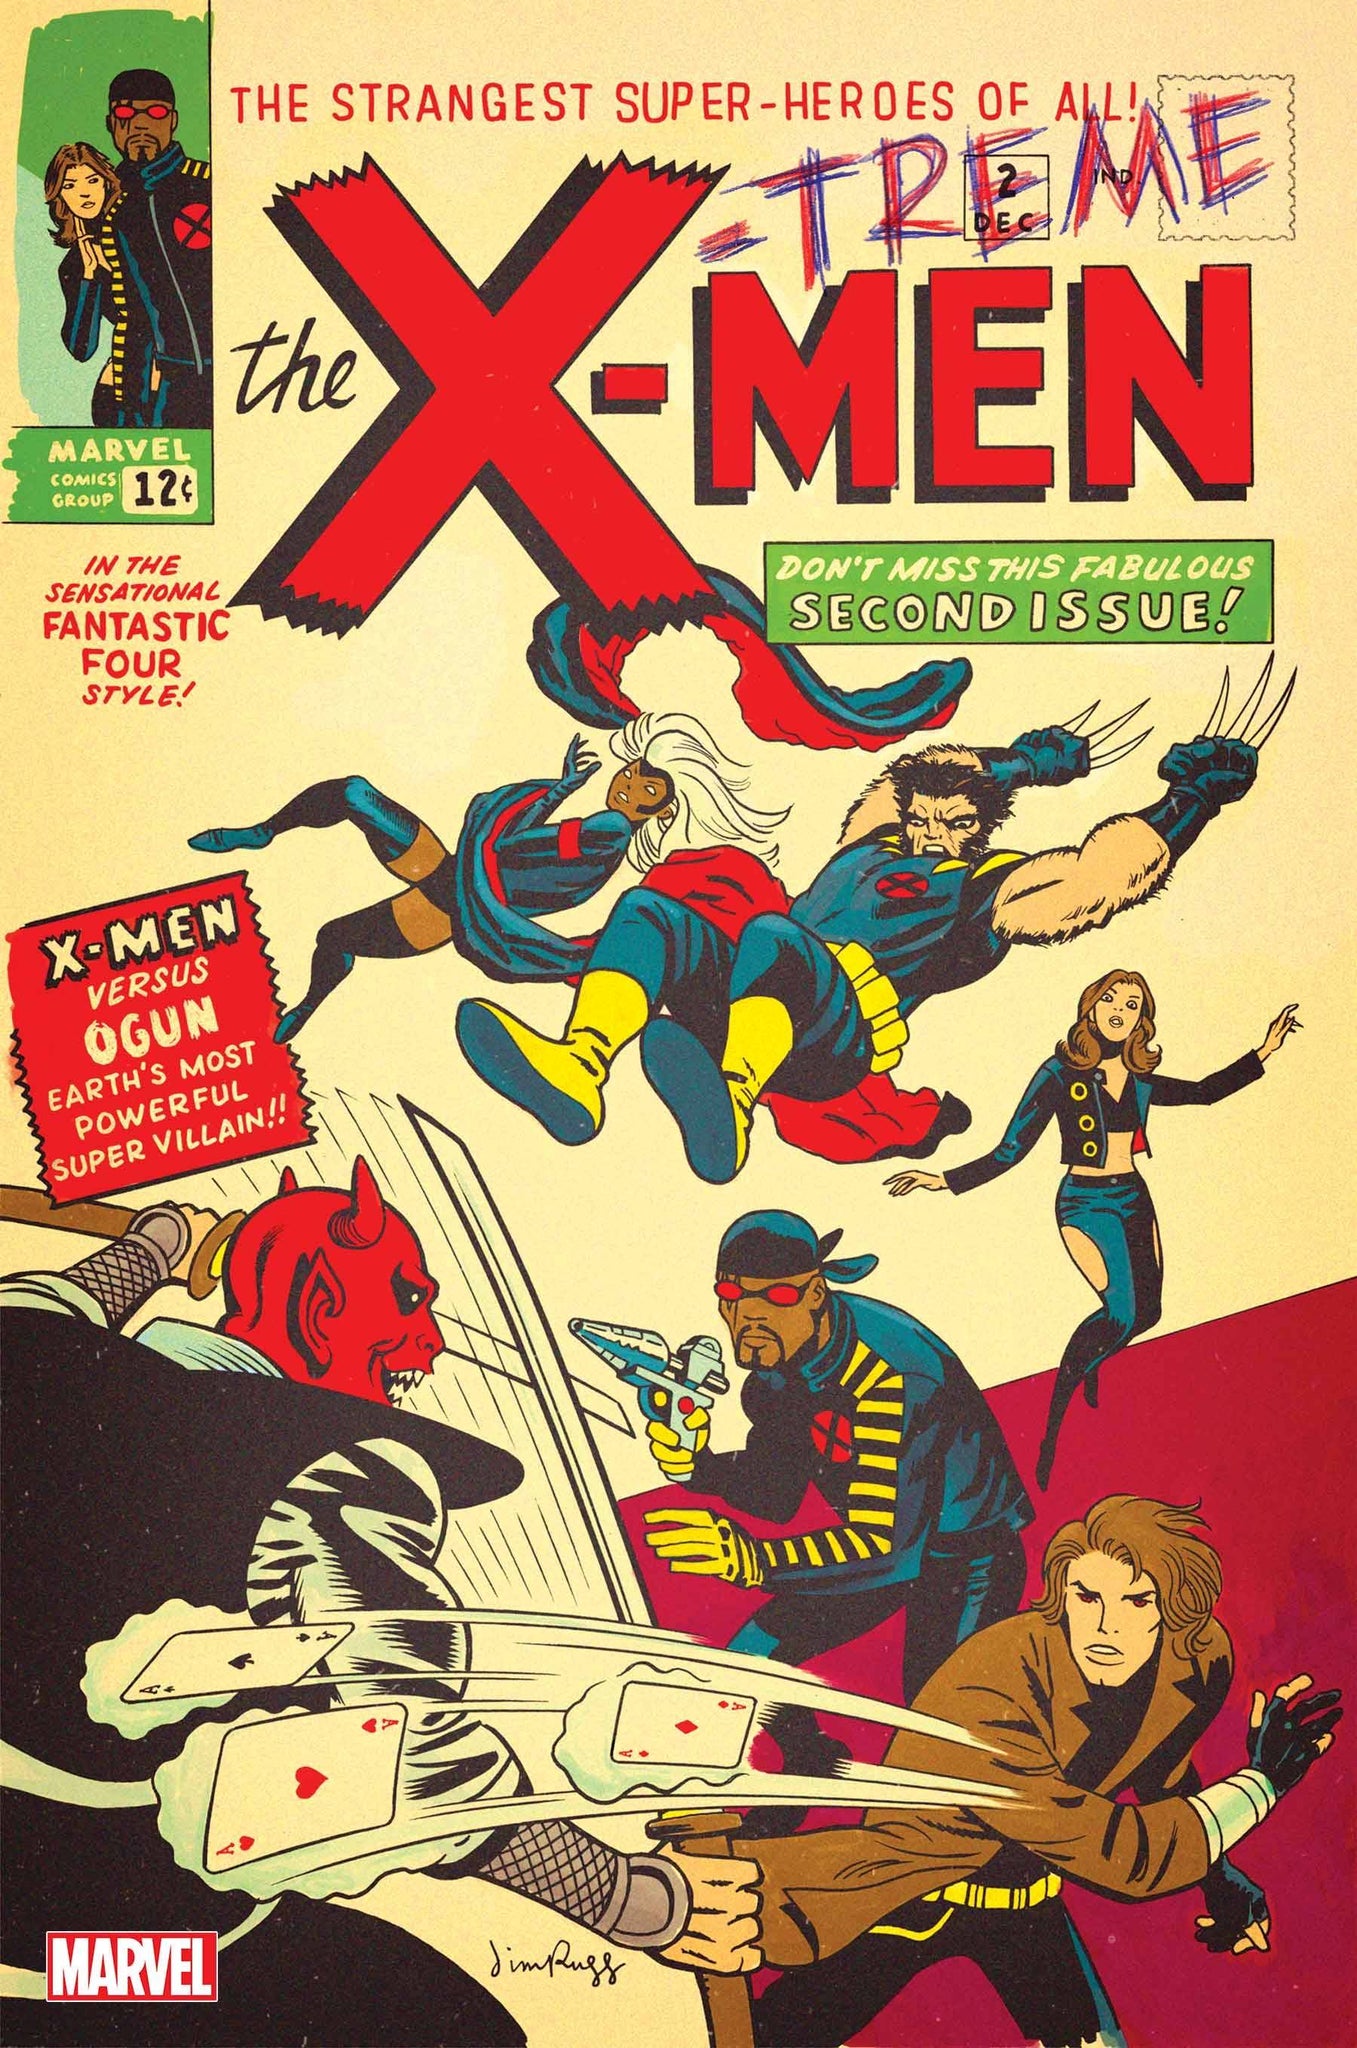 X-TREME X-MEN #2 (OF 5)